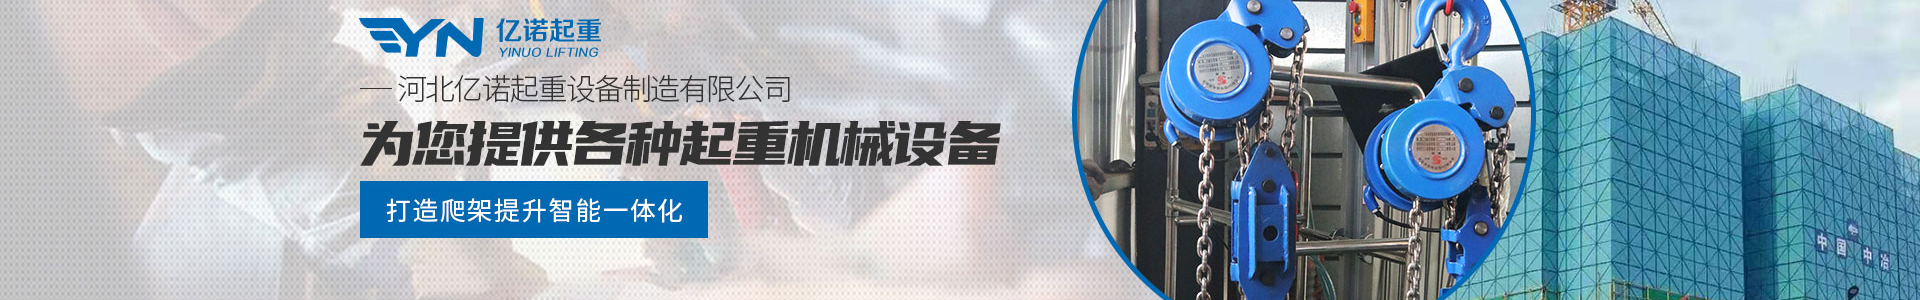 DH-L型1T环链电动葫芦_产品展示_亿诺起重有限公司